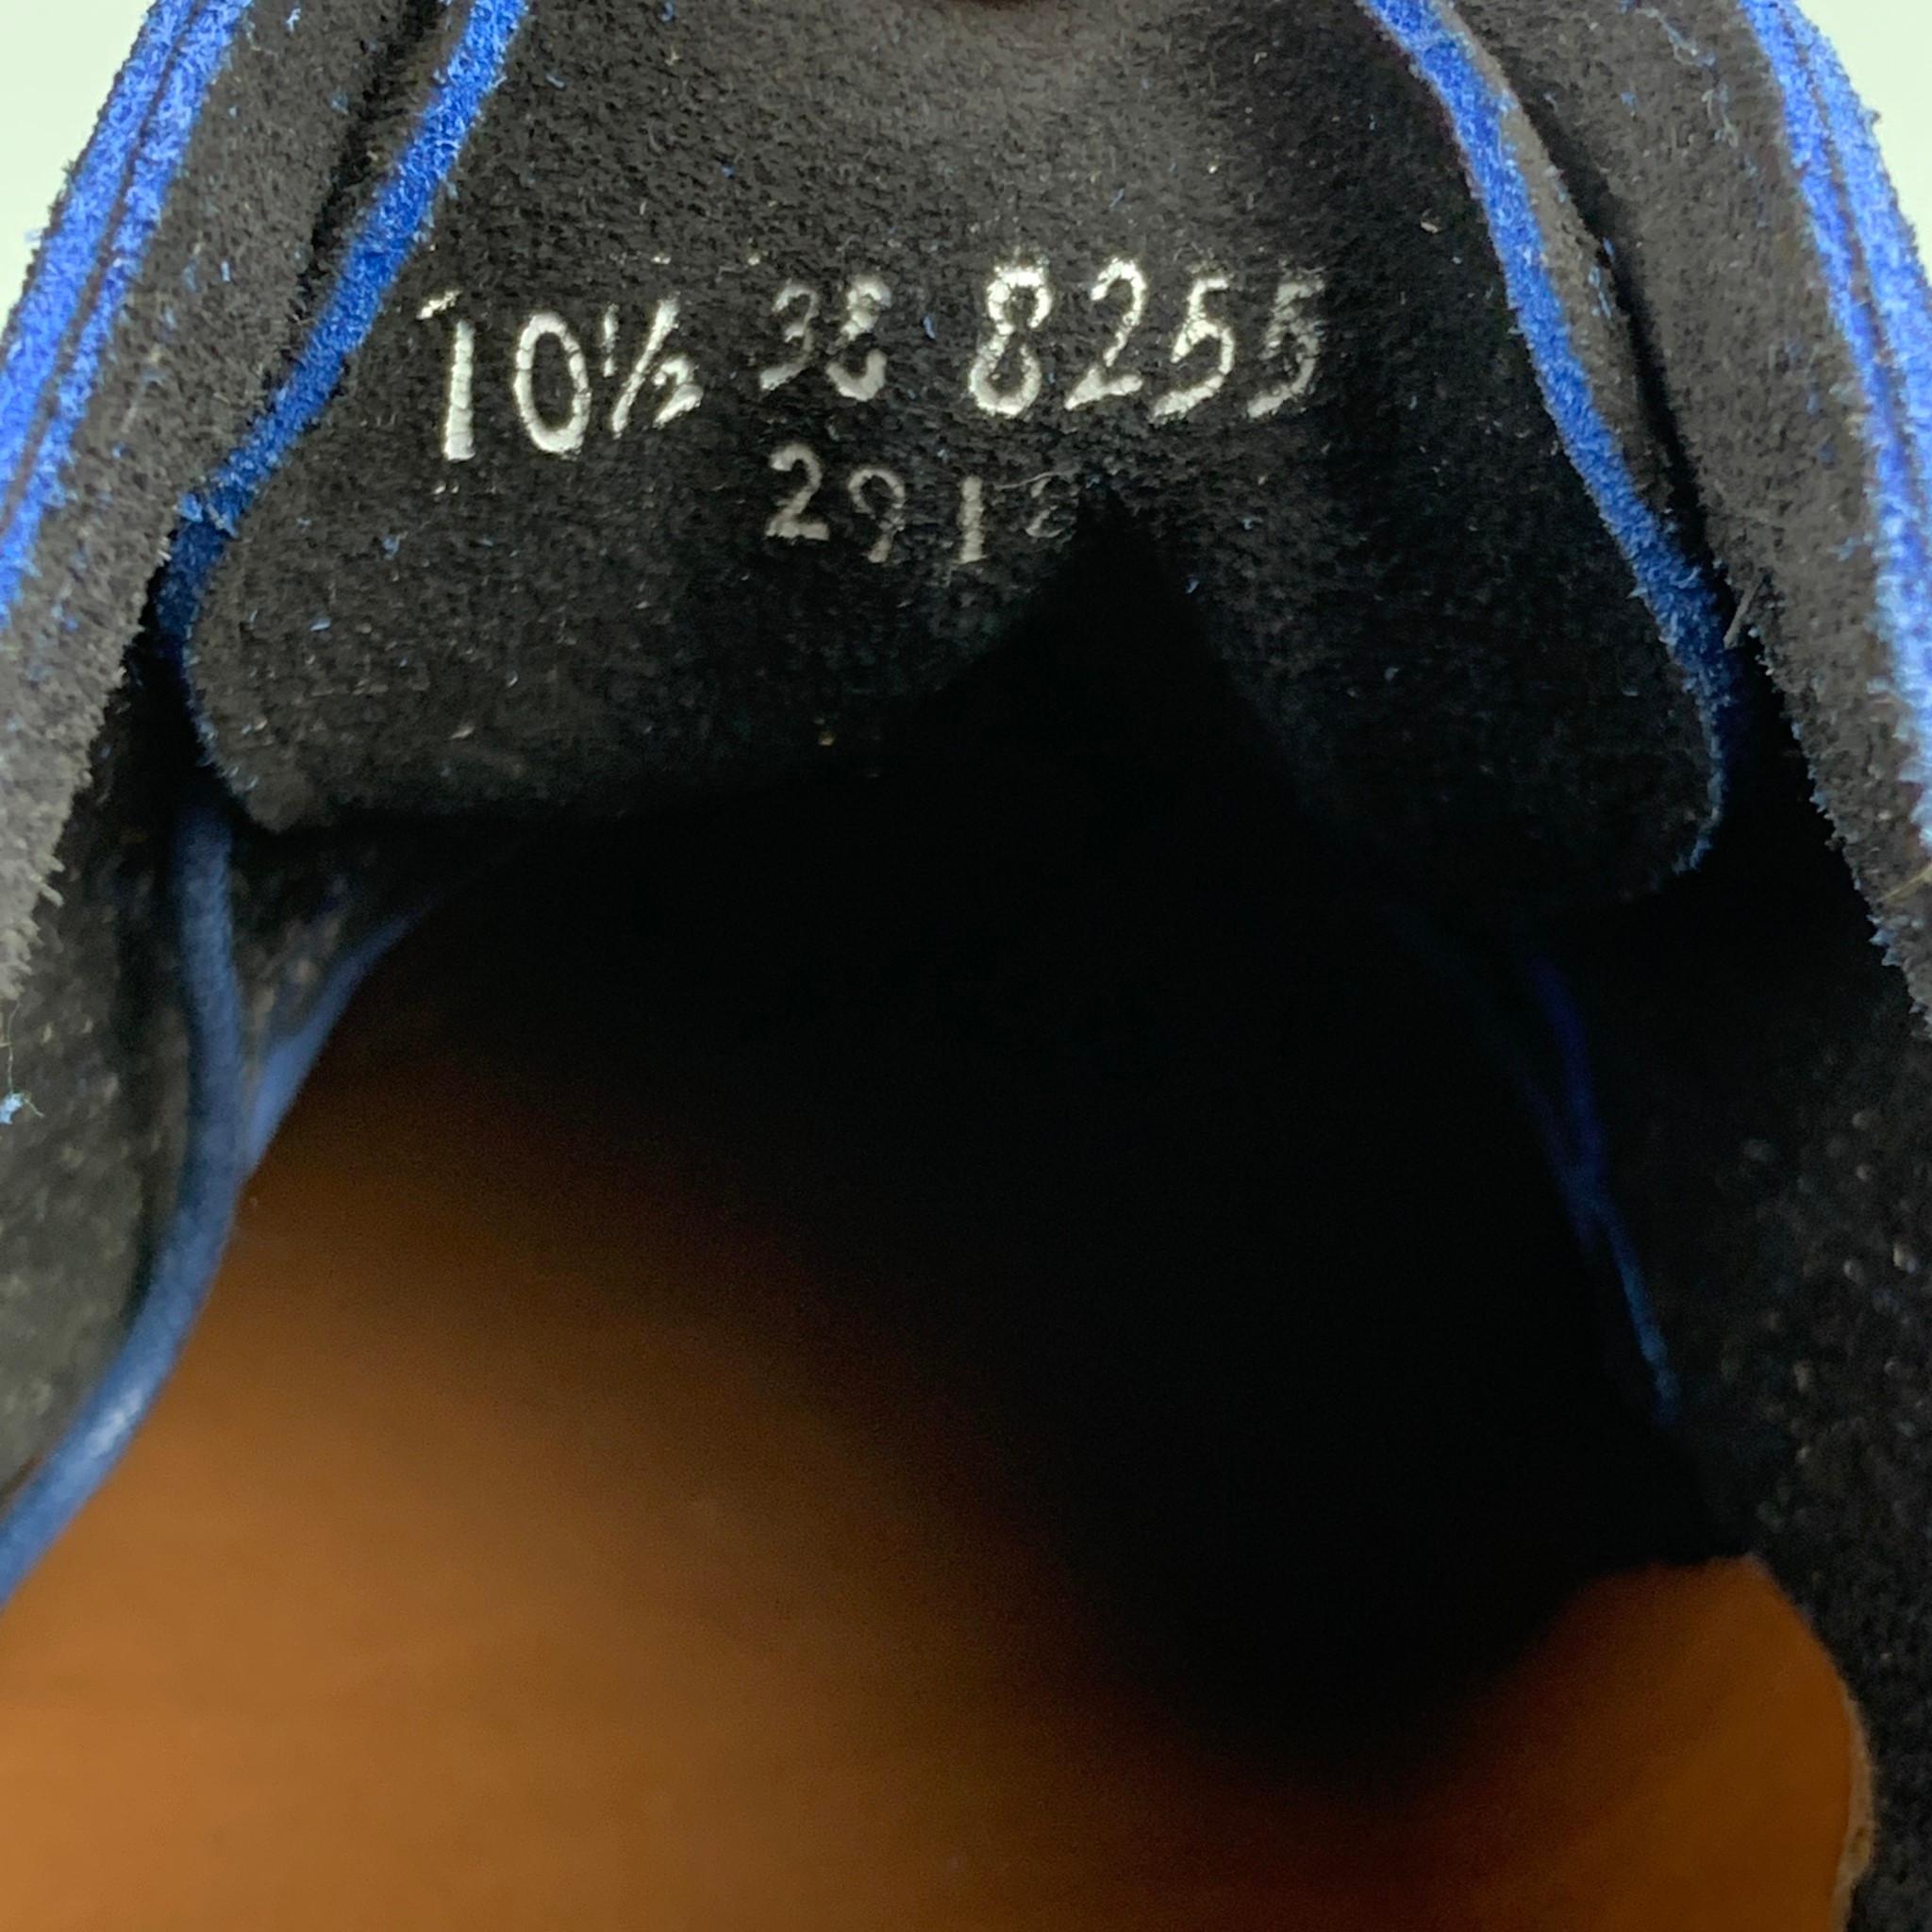 Black ALLEN EDMONDS Strandmok Size 11.5 Navy Perforated Suede Cap Toe Lace Up Shoes